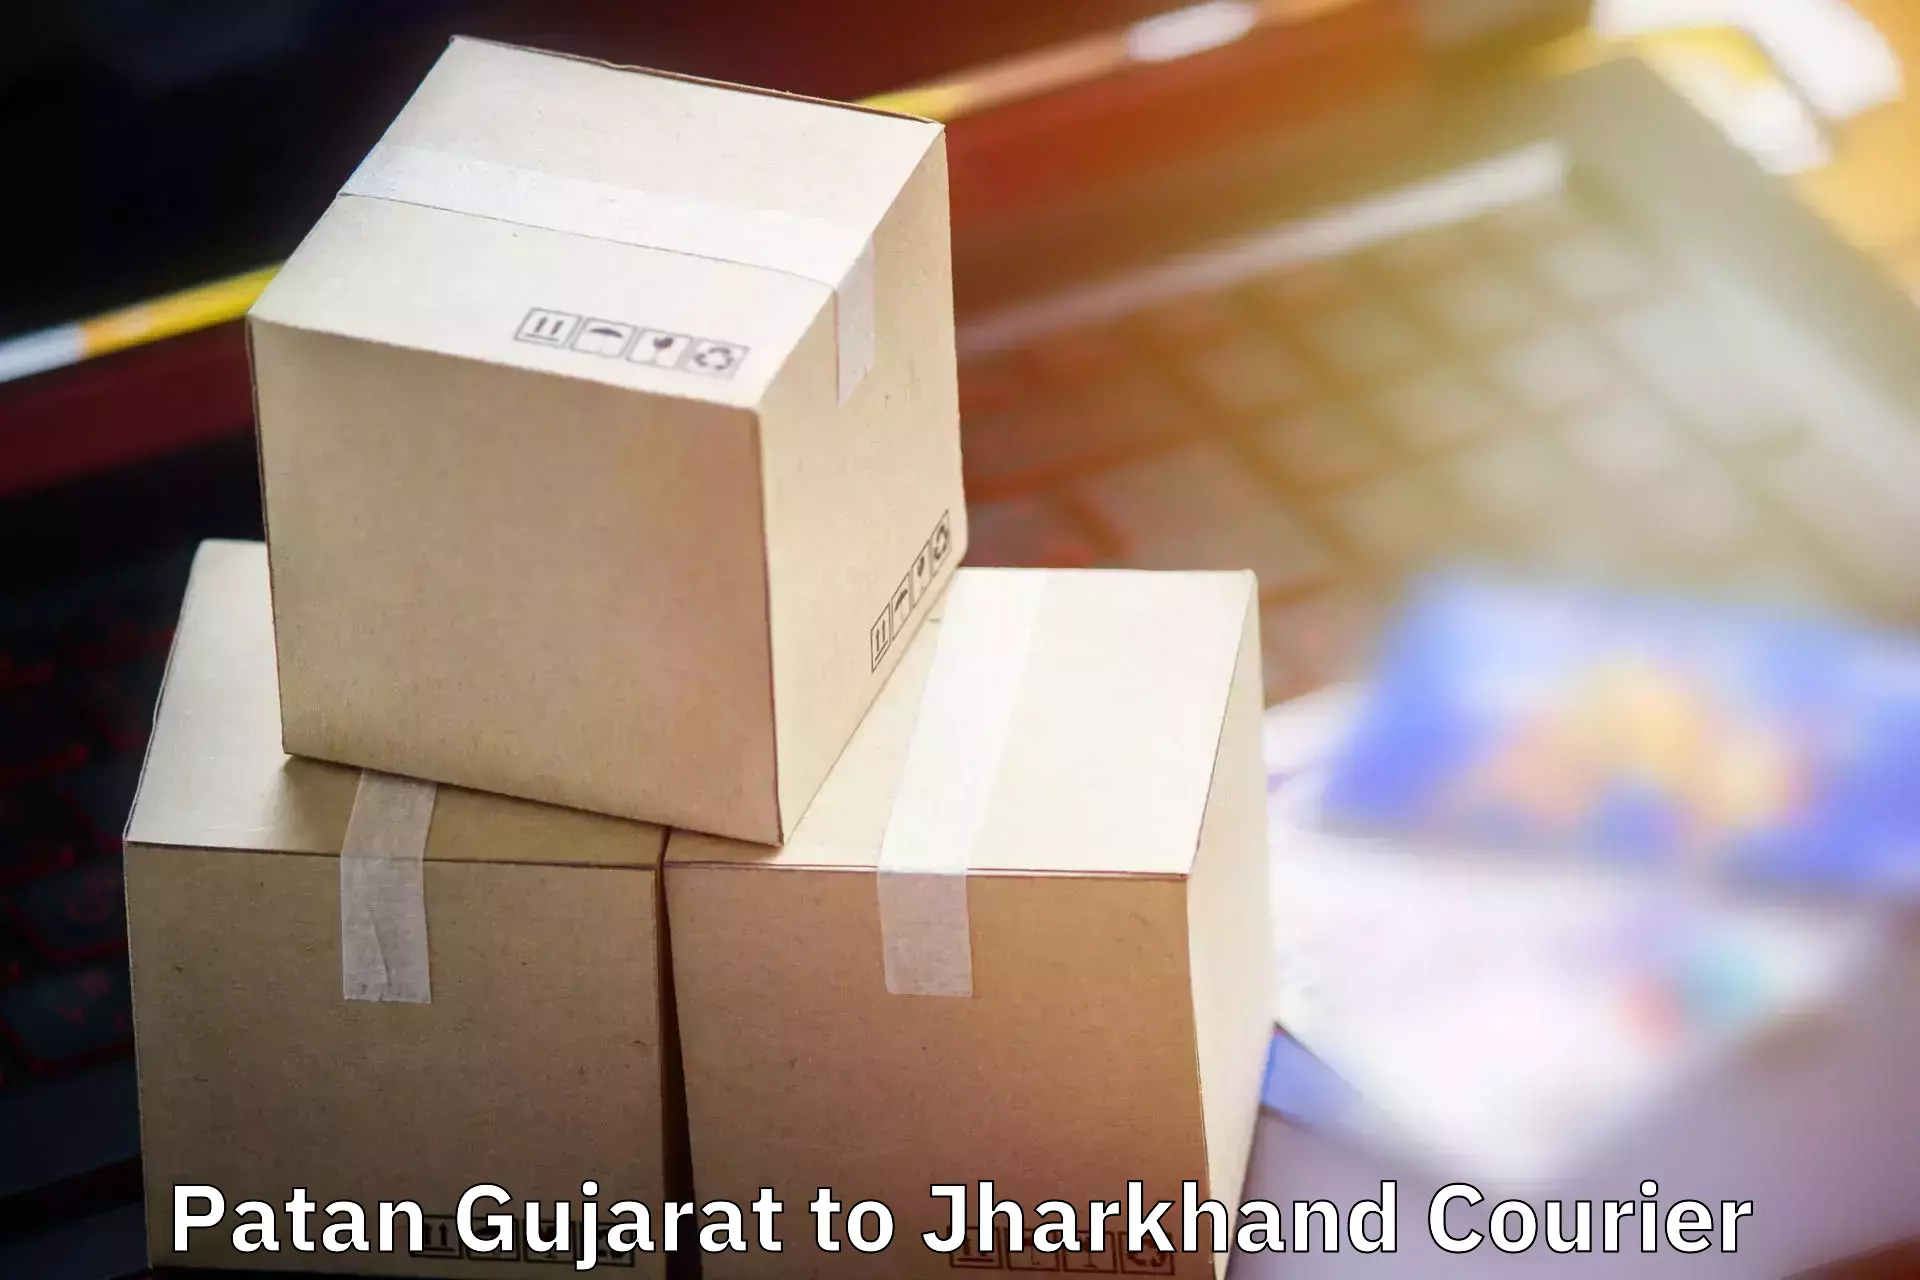 Personal effects shipping Patan Gujarat to Jamshedpur